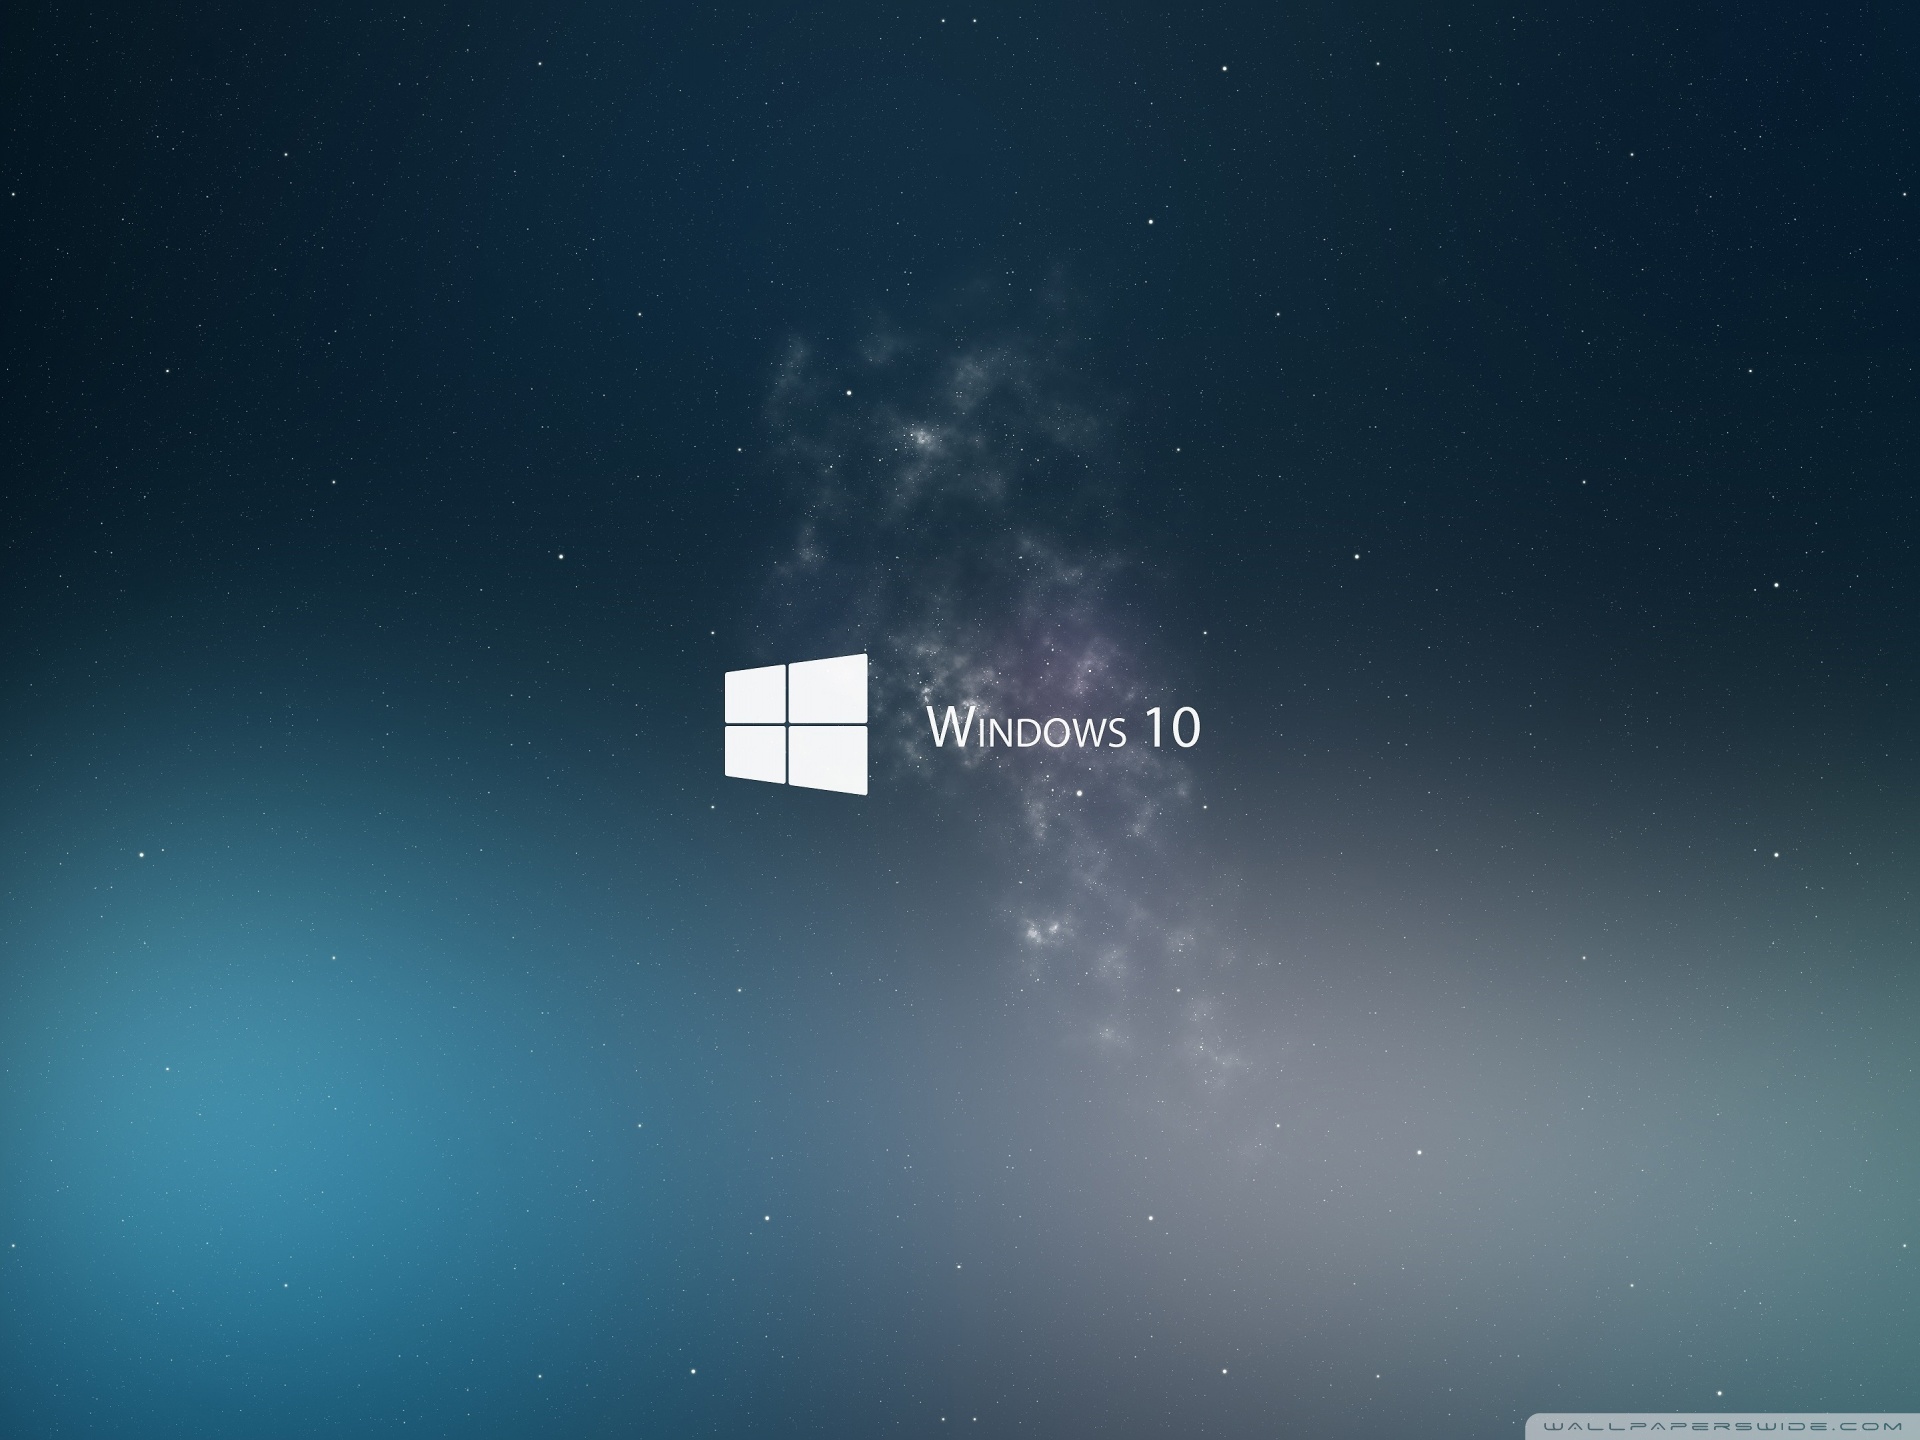 Windows 10 Ultra HD Desktop Background Wallpaper for: Widescreen & UltraWide Desktop & Laptop, Multi Display, Dual Monitor, Tablet